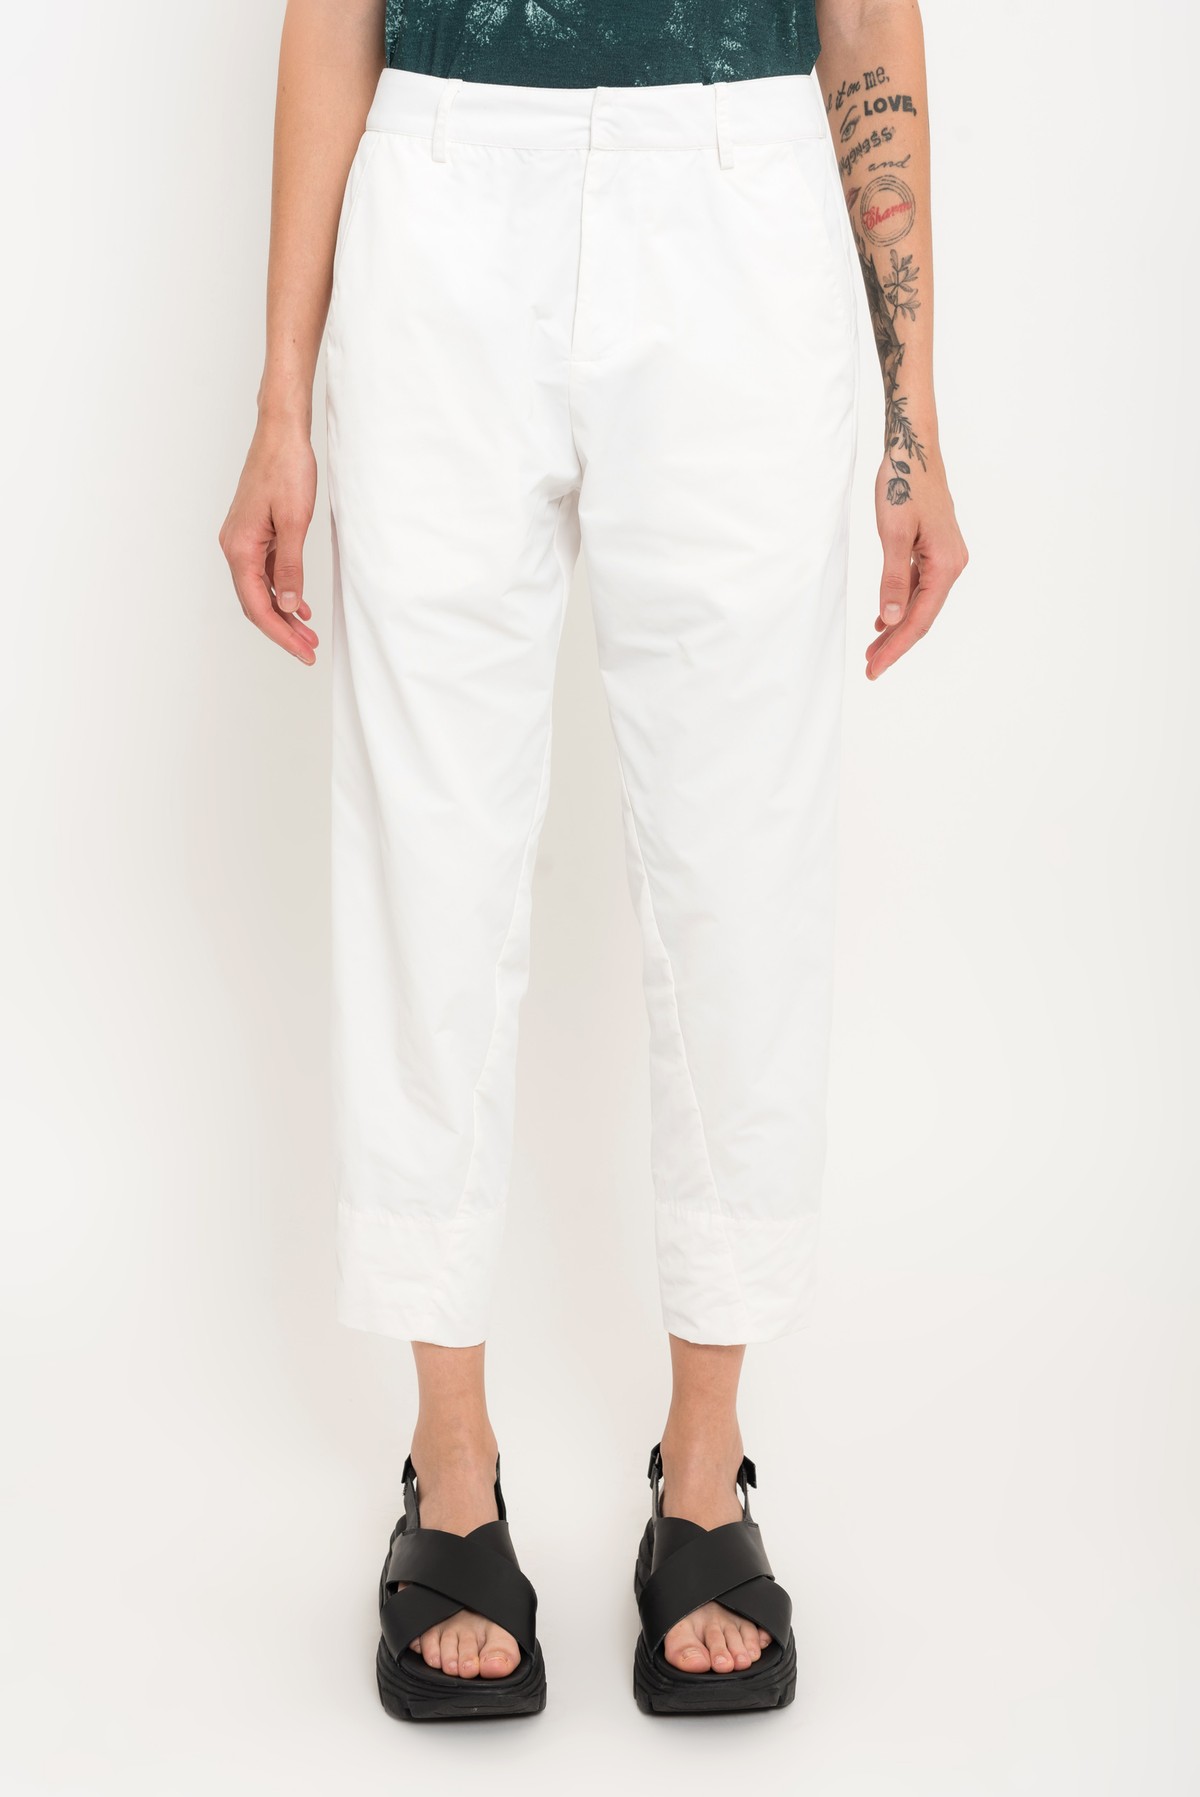 calça alfaiataria em nylon  | nylon tailored pants